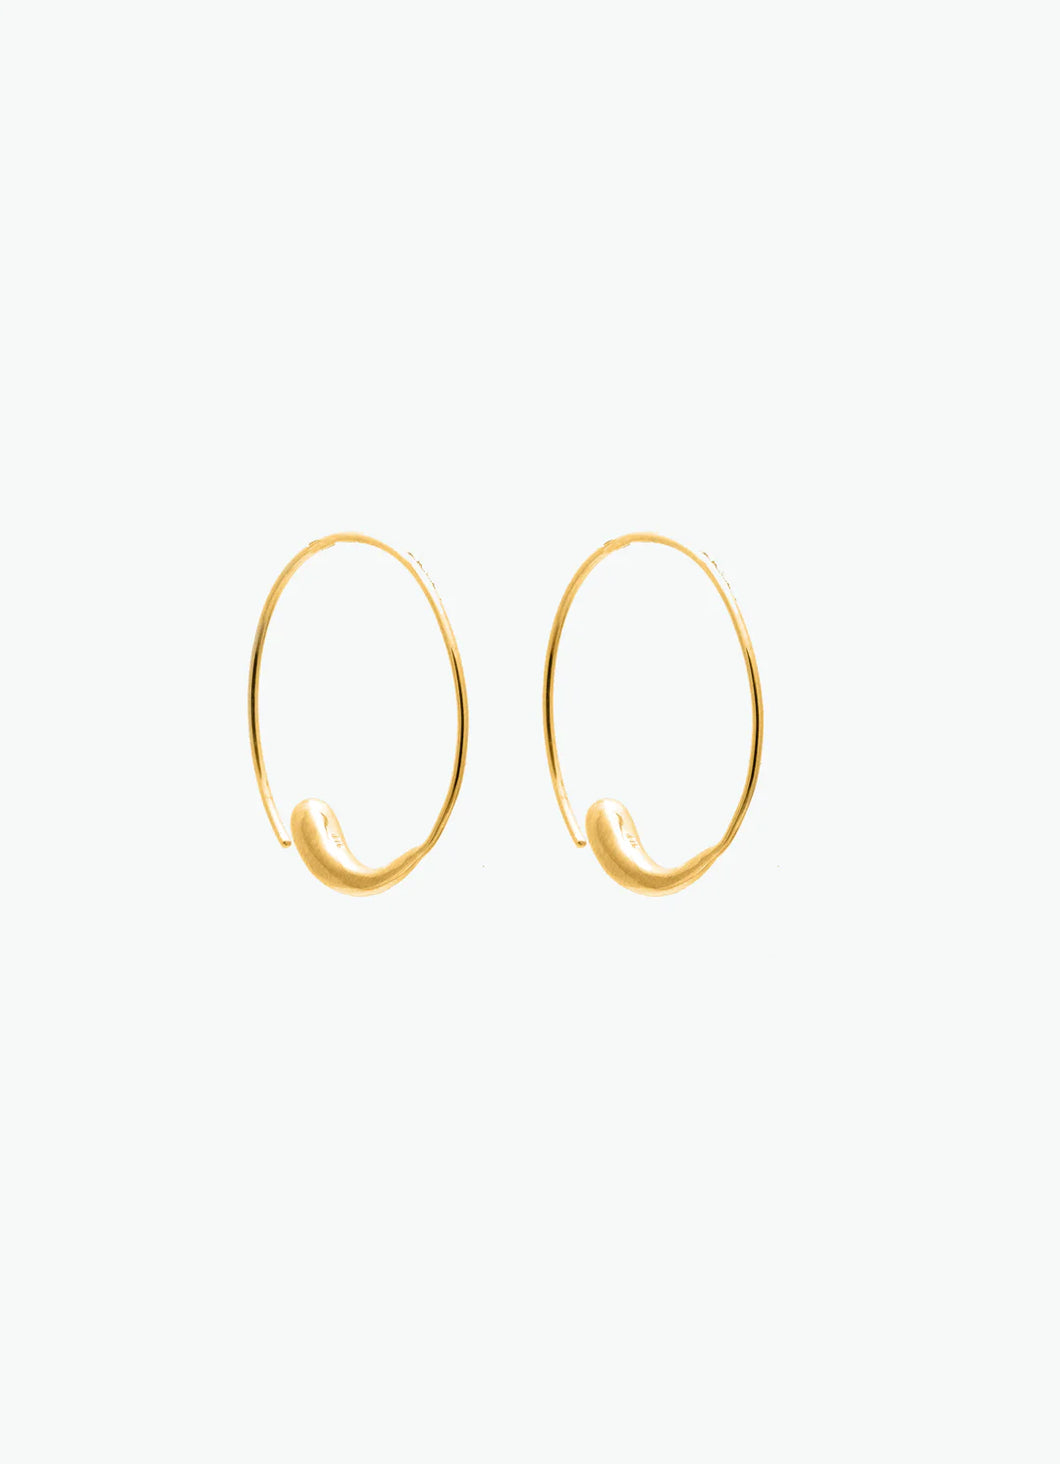 Swirl Hoops | Large - Gold